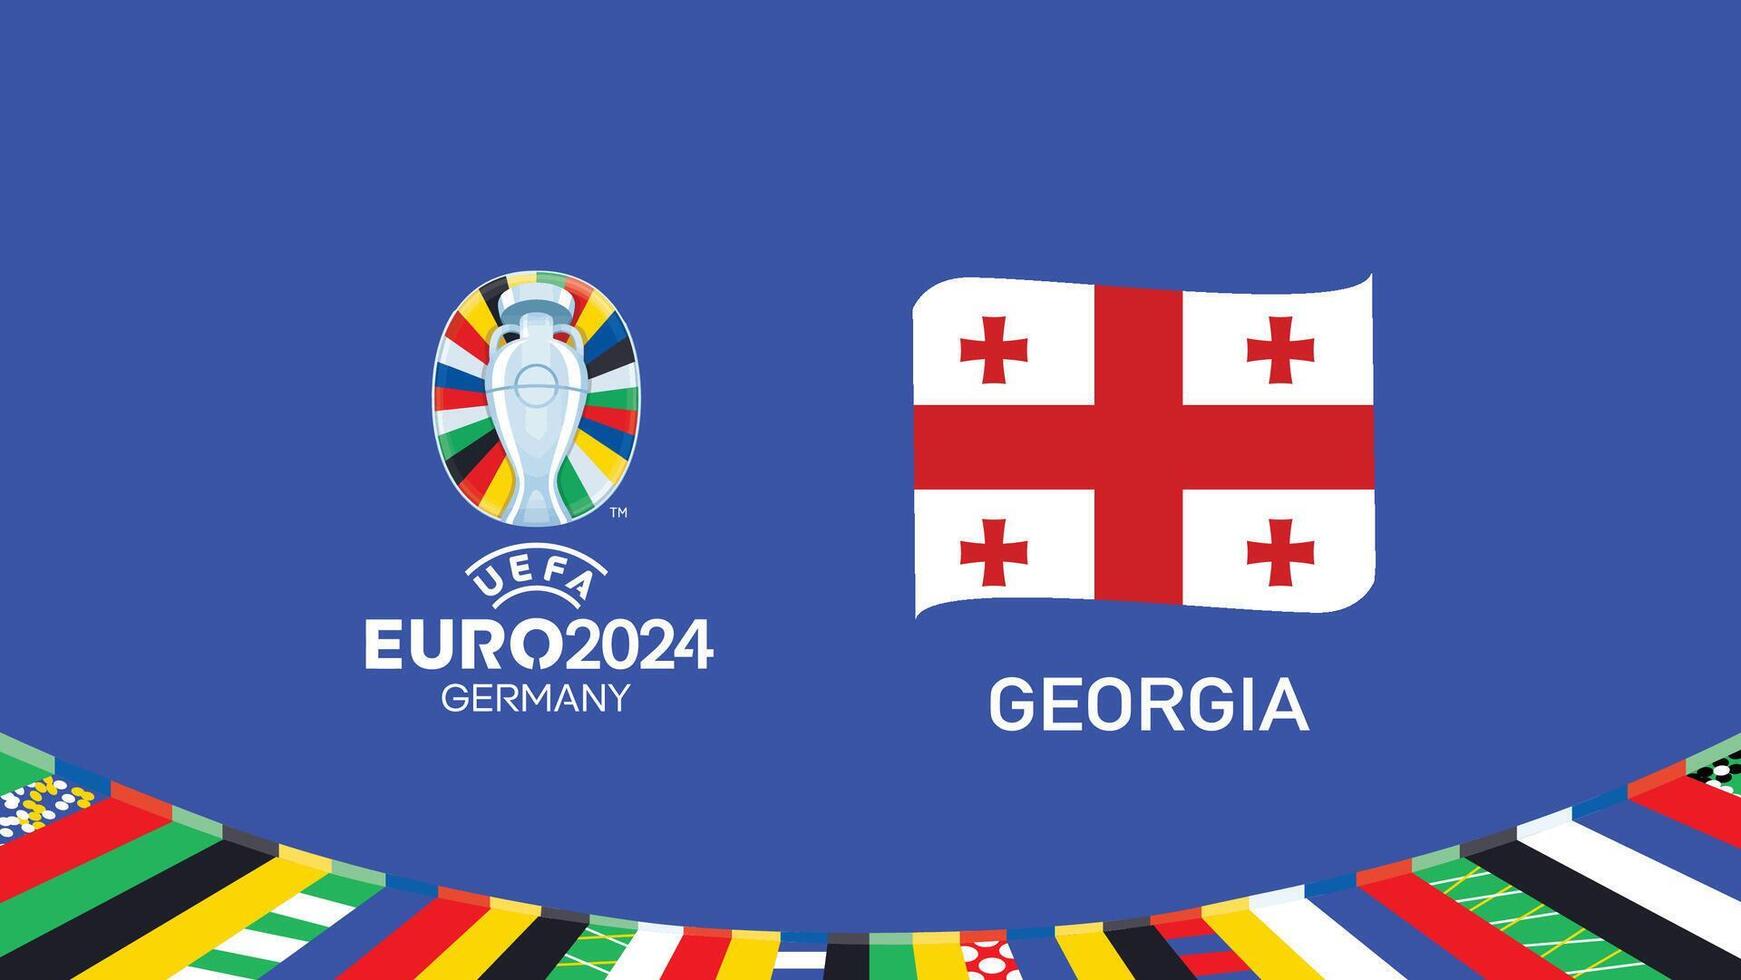 Euro 2024 Georgia Flag Ribbon Teams Design With Official Symbol Logo Abstract Countries European Football Illustration vector